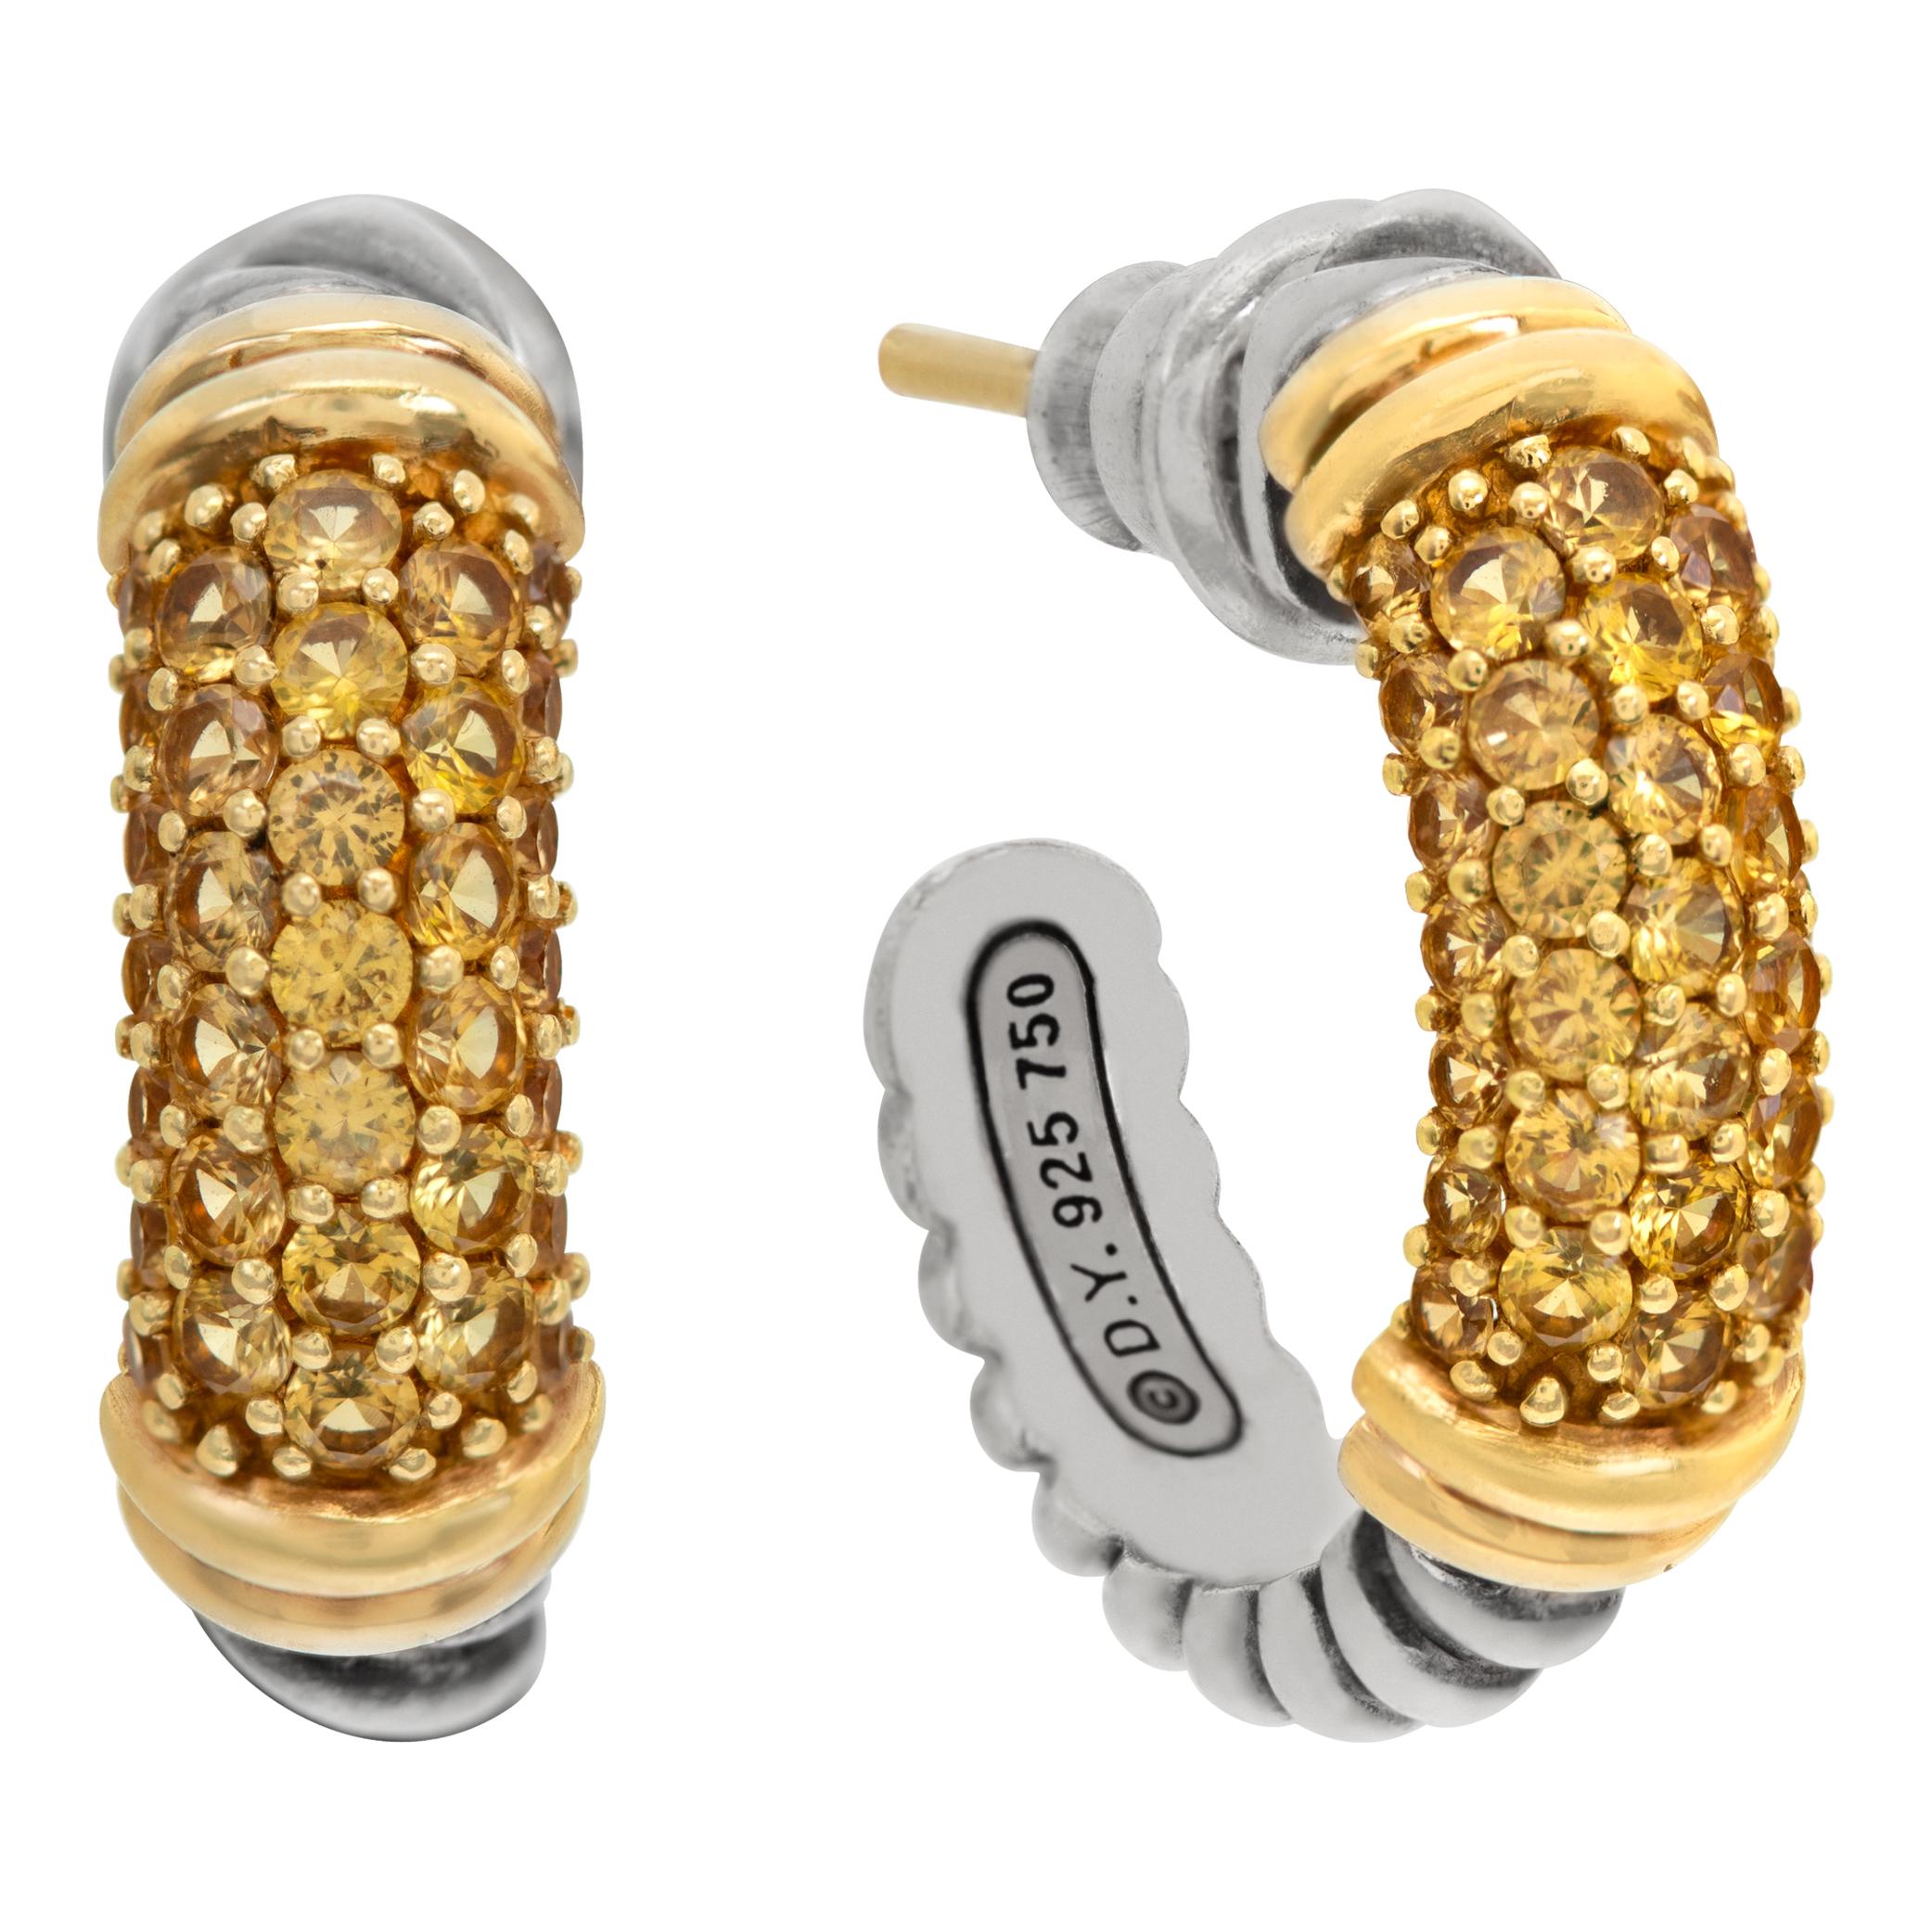 David Yurman Sapphire Cable Candy Metro Hoop Earings in 18k and sterling silver. 5.5 mm width. 0.75 inch diameter.